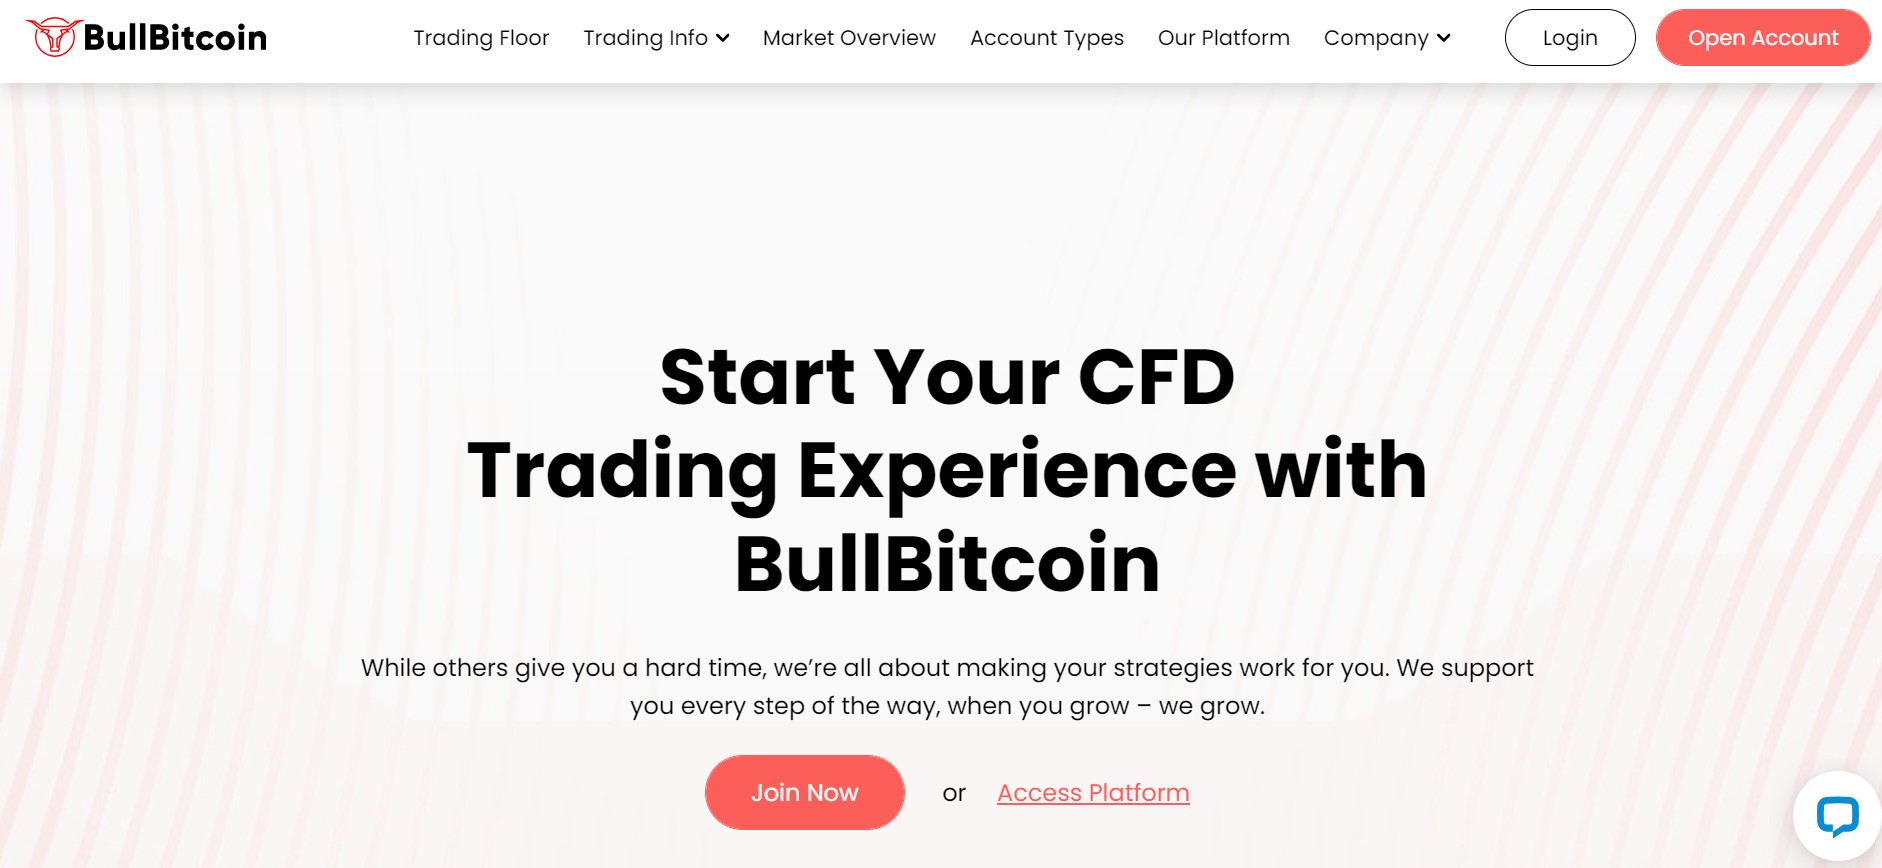 BullBitcoin website